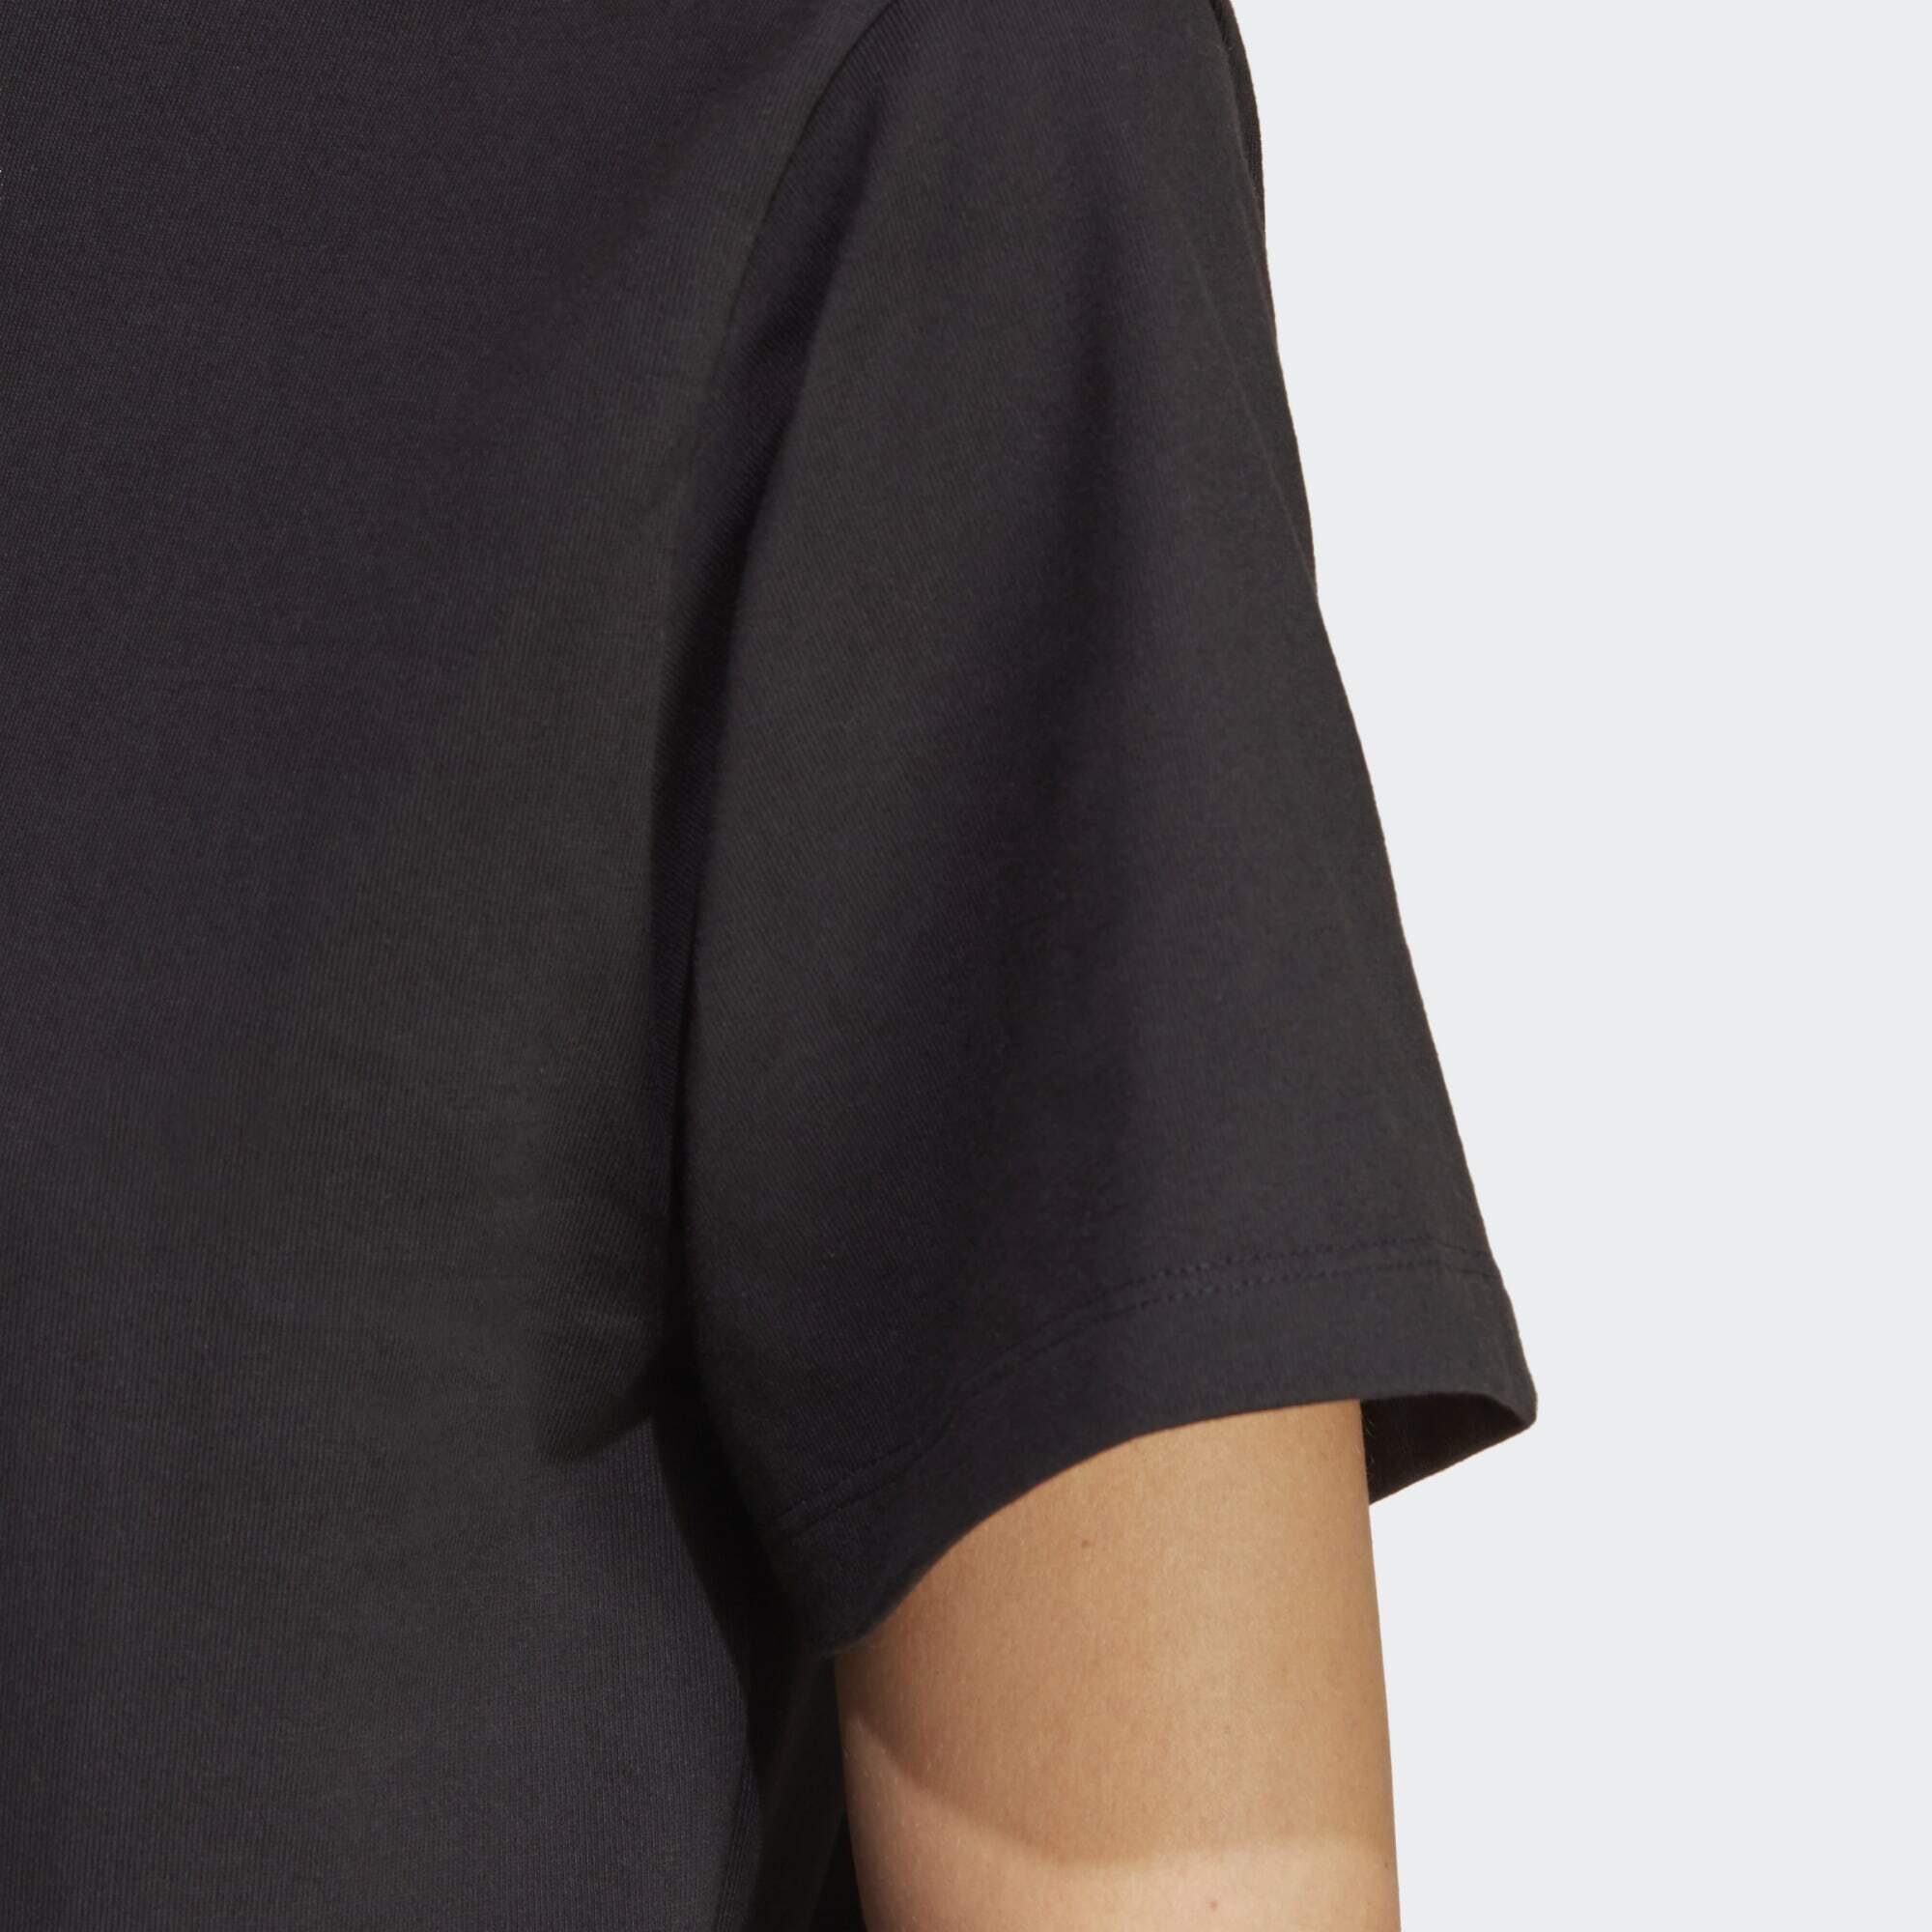 T-SHIRT ADICOLOR REGULAR T-Shirt Black adidas ESSENTIALS Originals